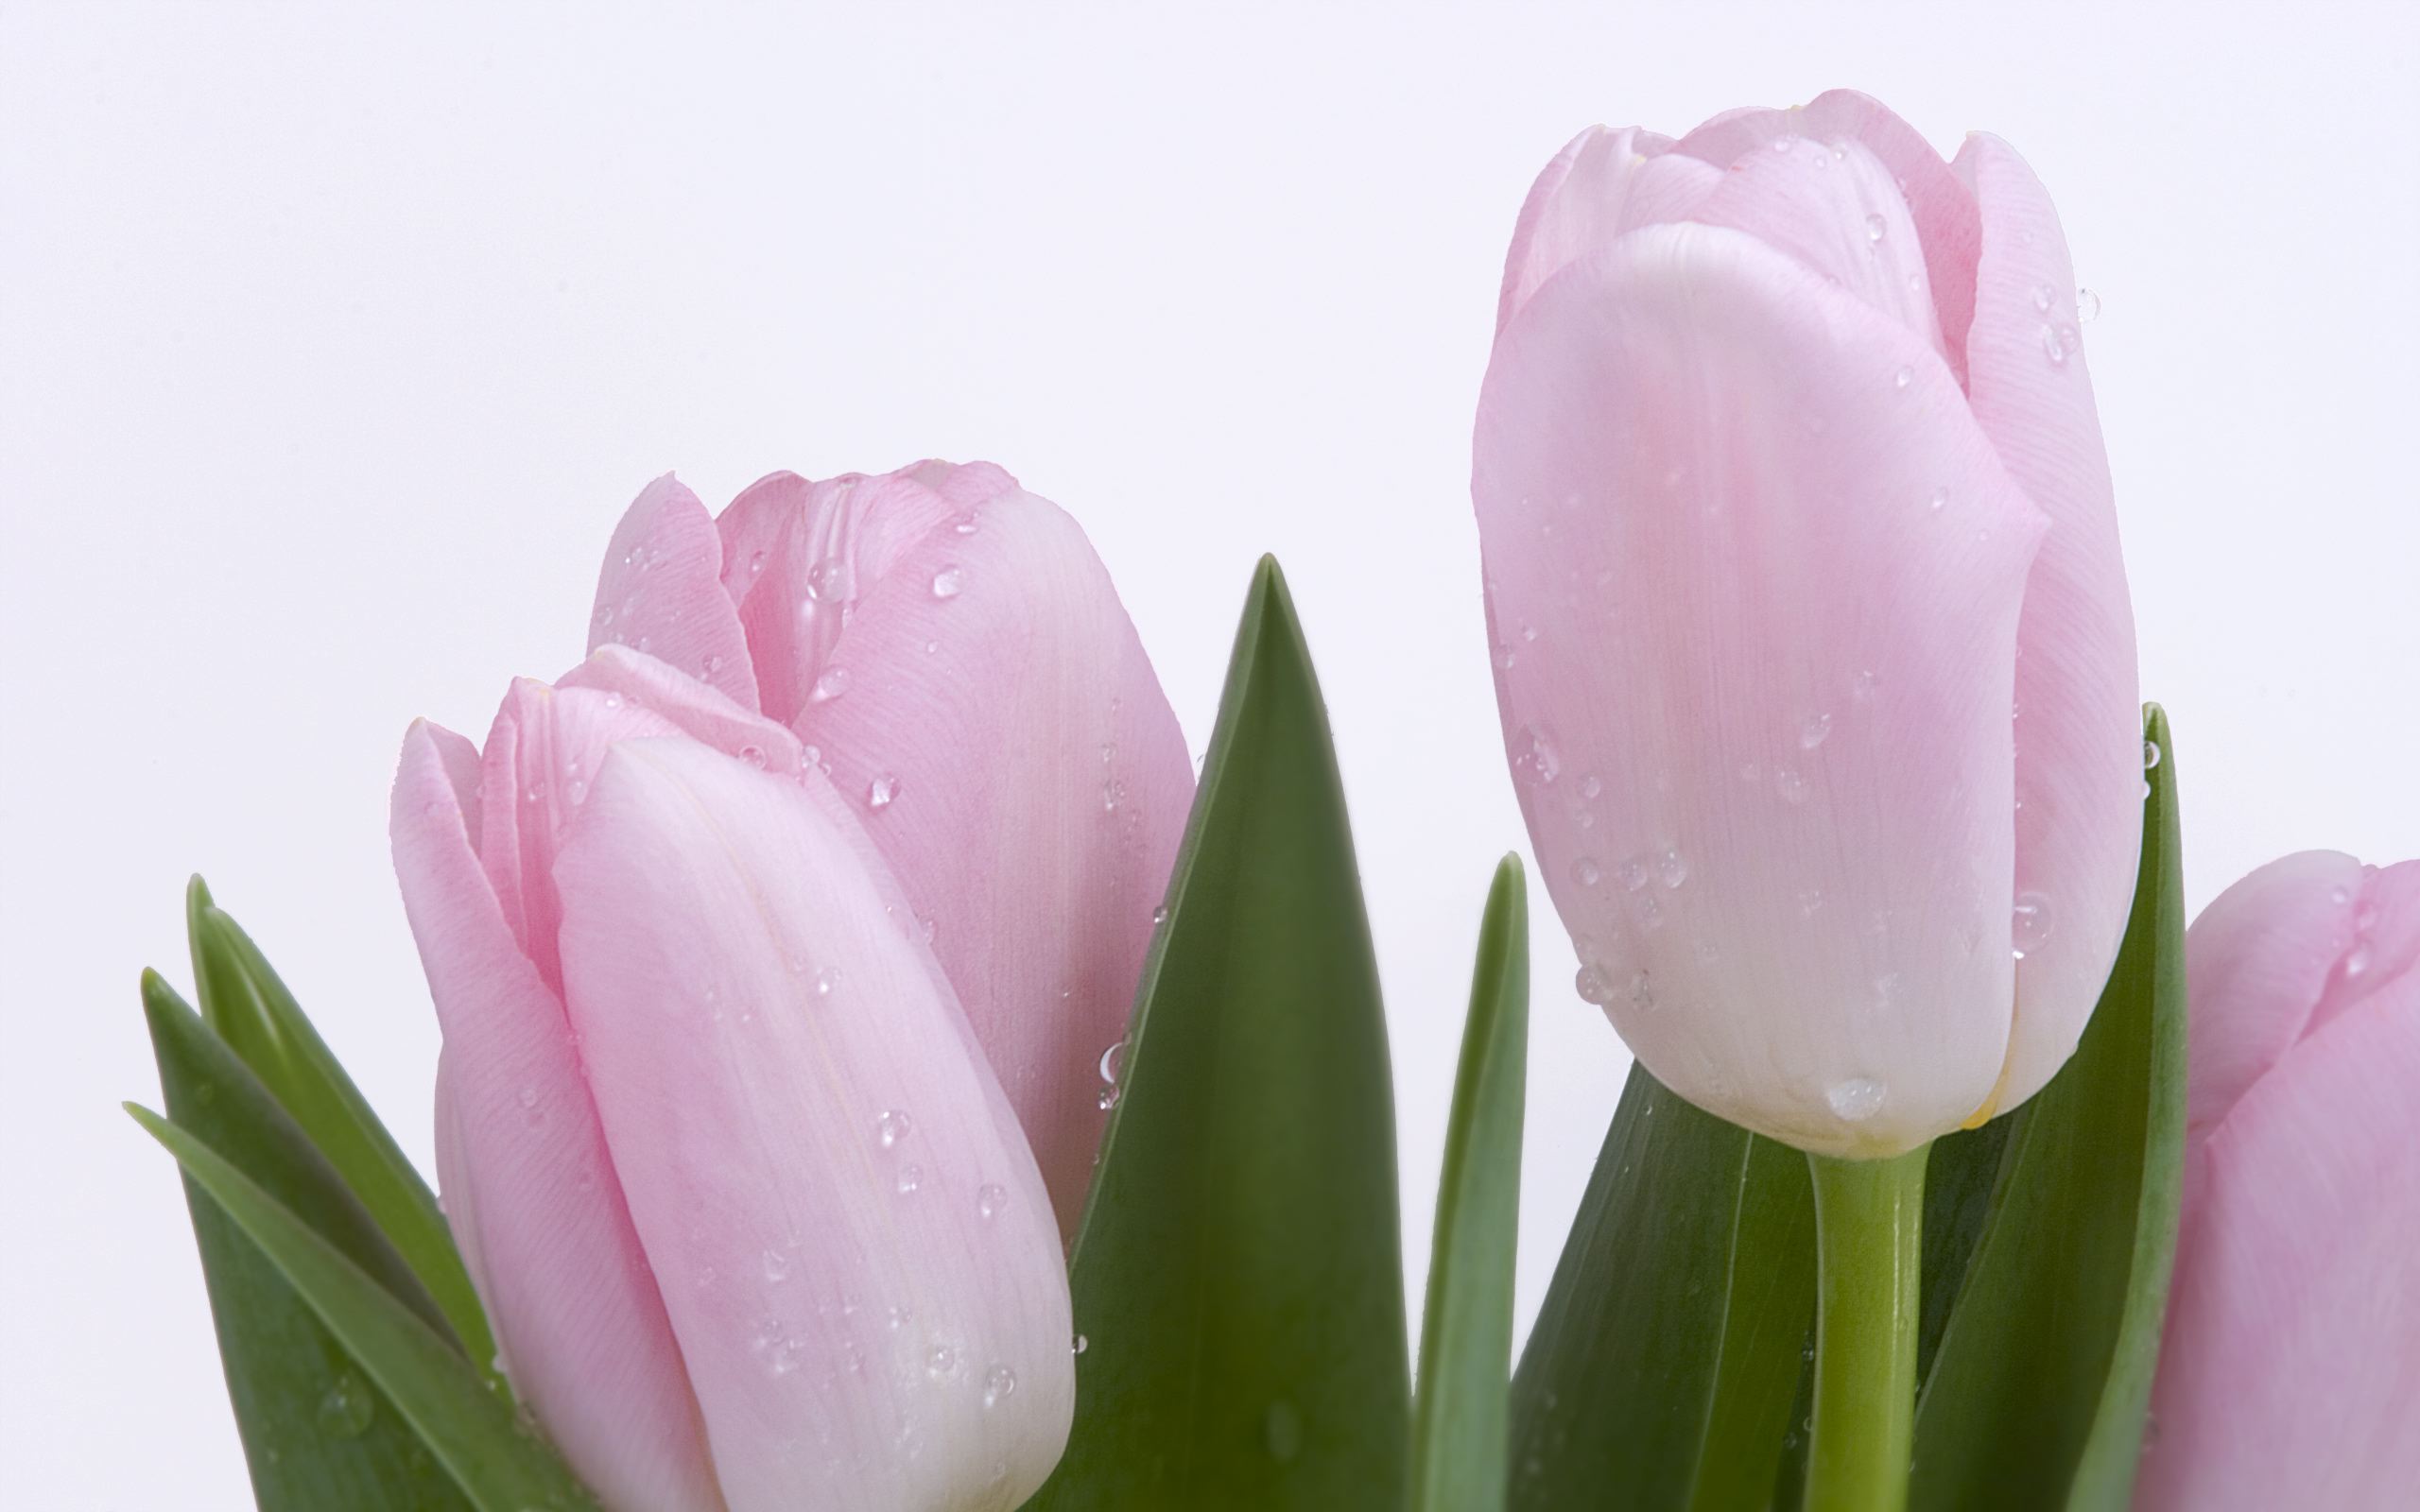 Pink Fresh Tulips